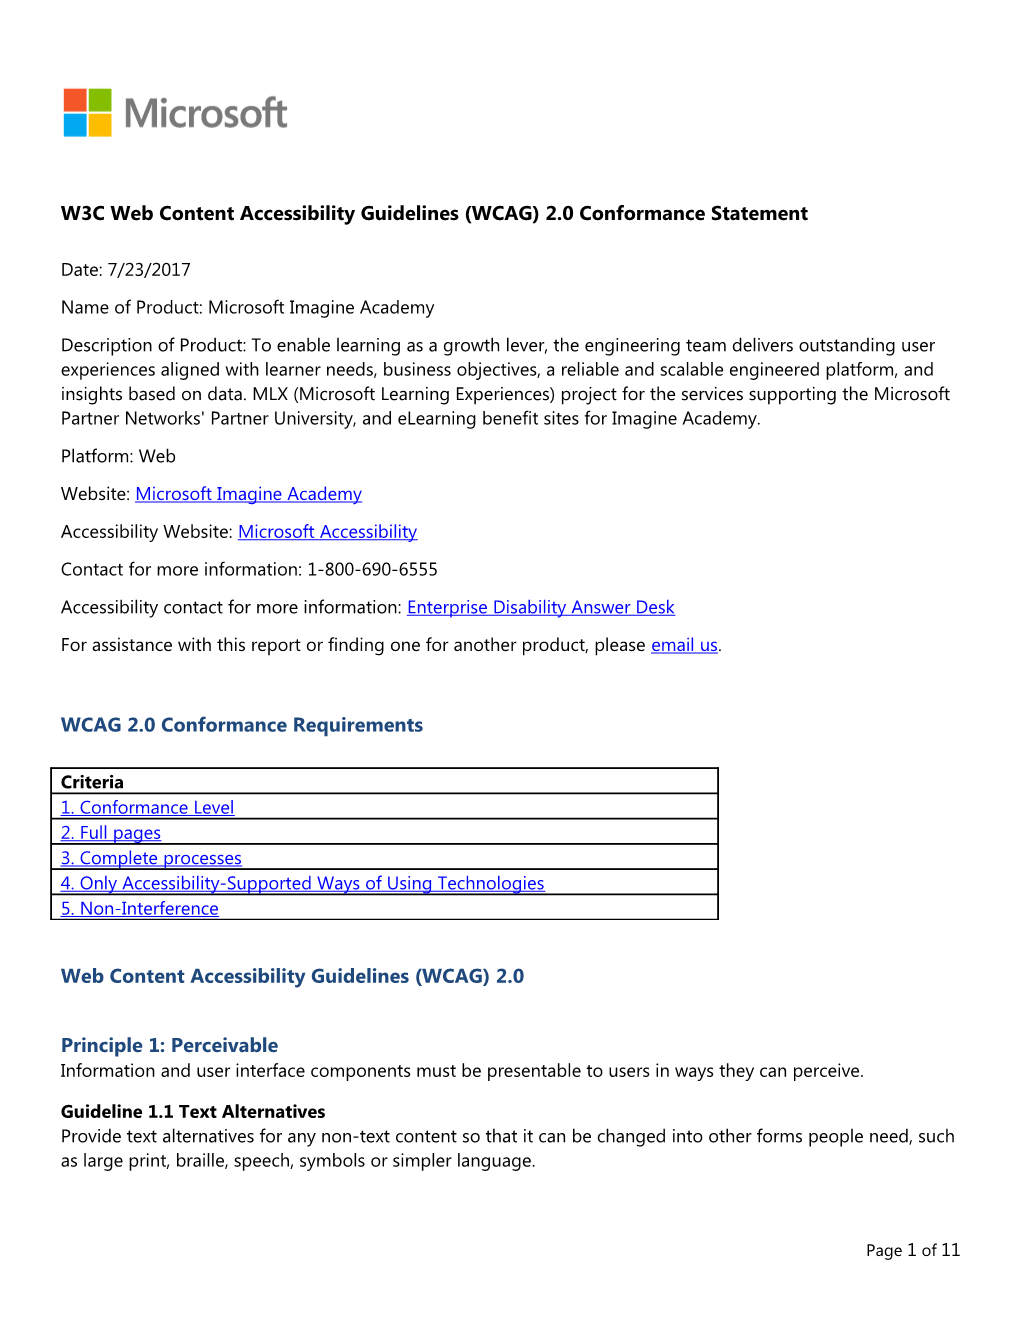 W3C Web Content Accessibility Guidelines (WCAG) 2.0 Conformance Statement s4